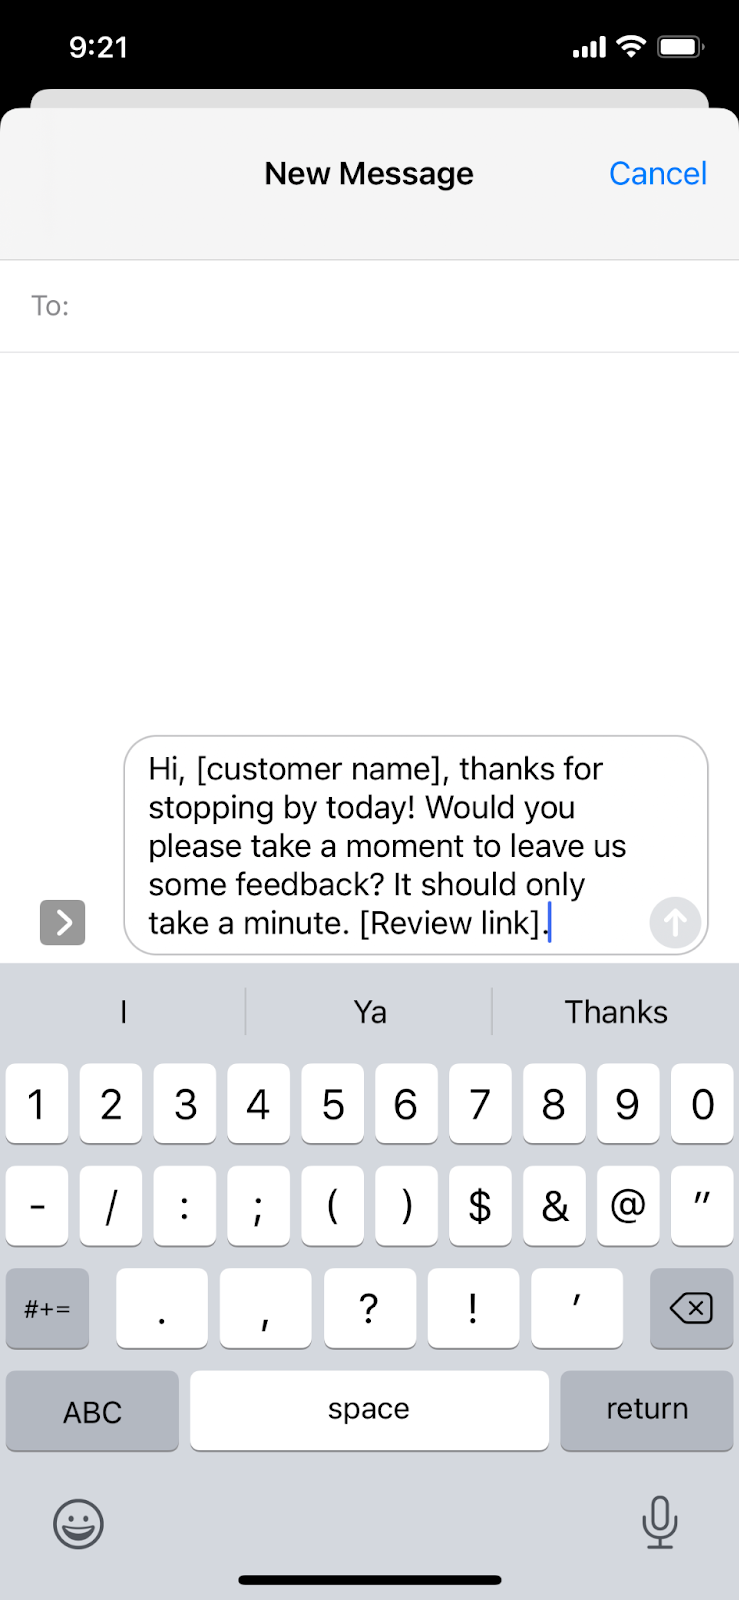 SMS client outreach